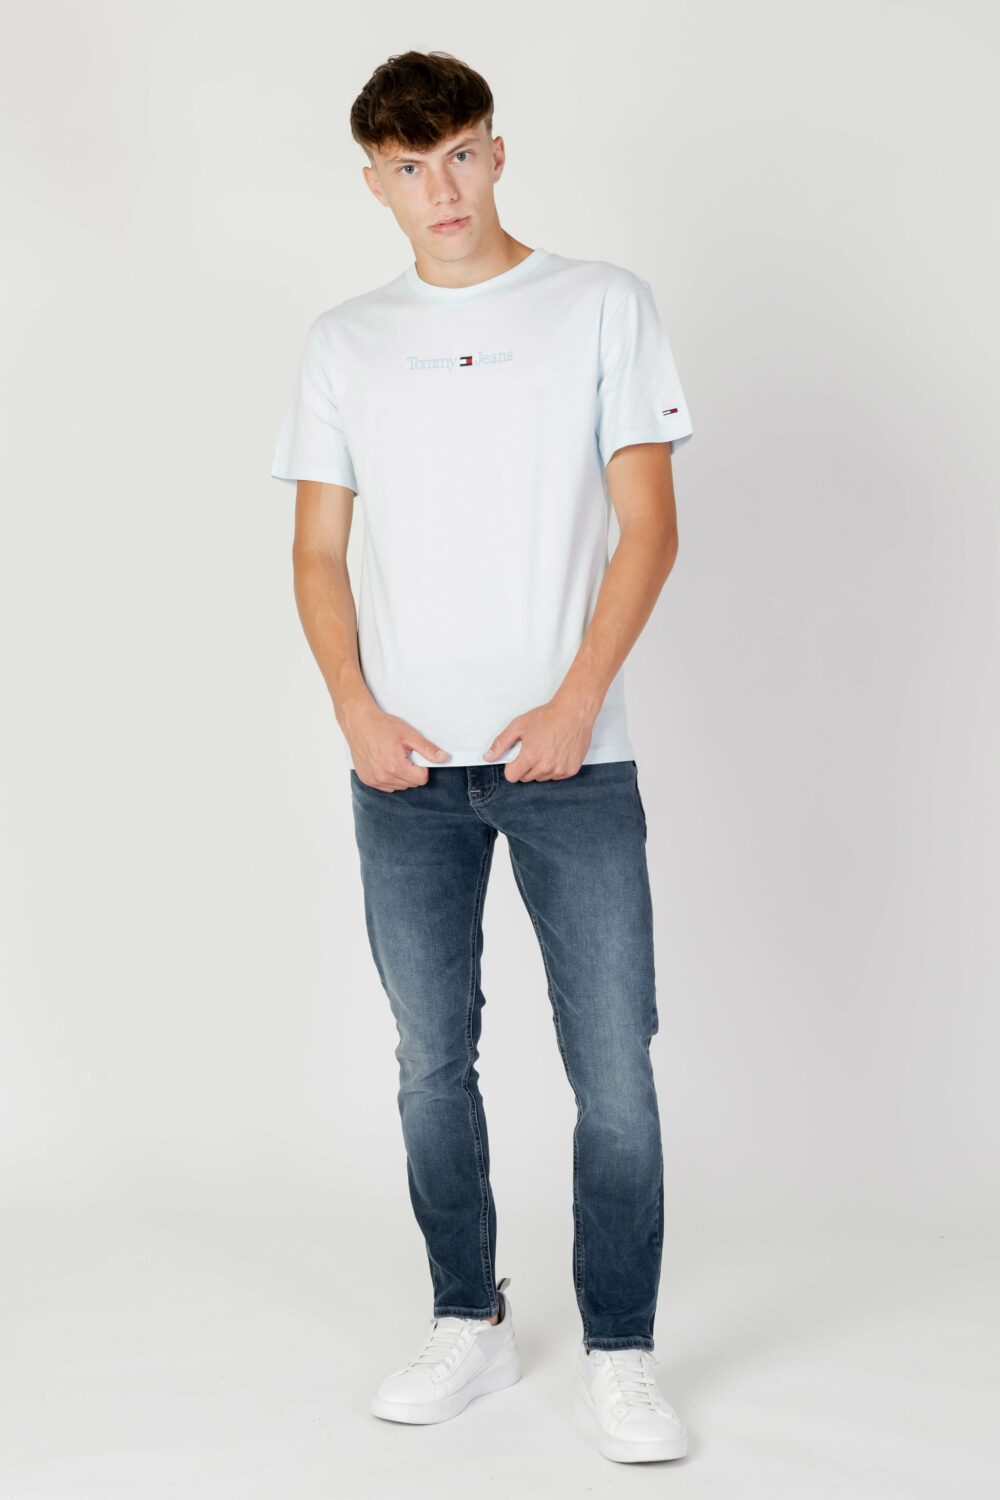 T-shirt Tommy Hilfiger Jeans TJM CLSC SMALL TEXT Celeste - Foto 3